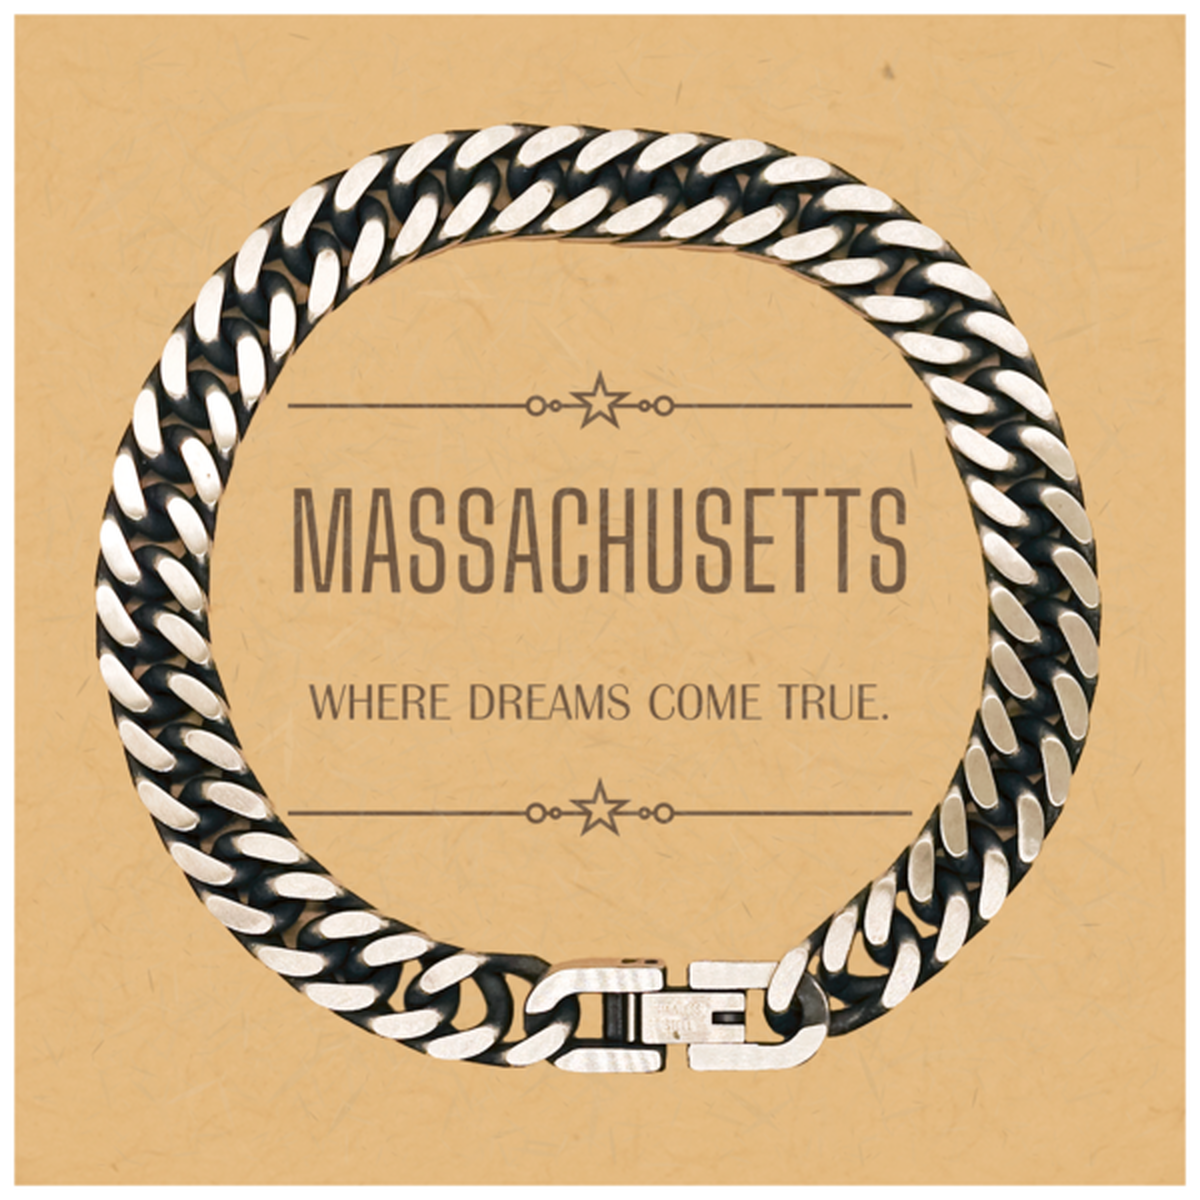 Love Massachusetts State Cuban Link Chain Bracelet, Massachusetts Where dreams come true, Birthday Christmas Inspirational Gifts For Massachusetts Men, Women, Friends